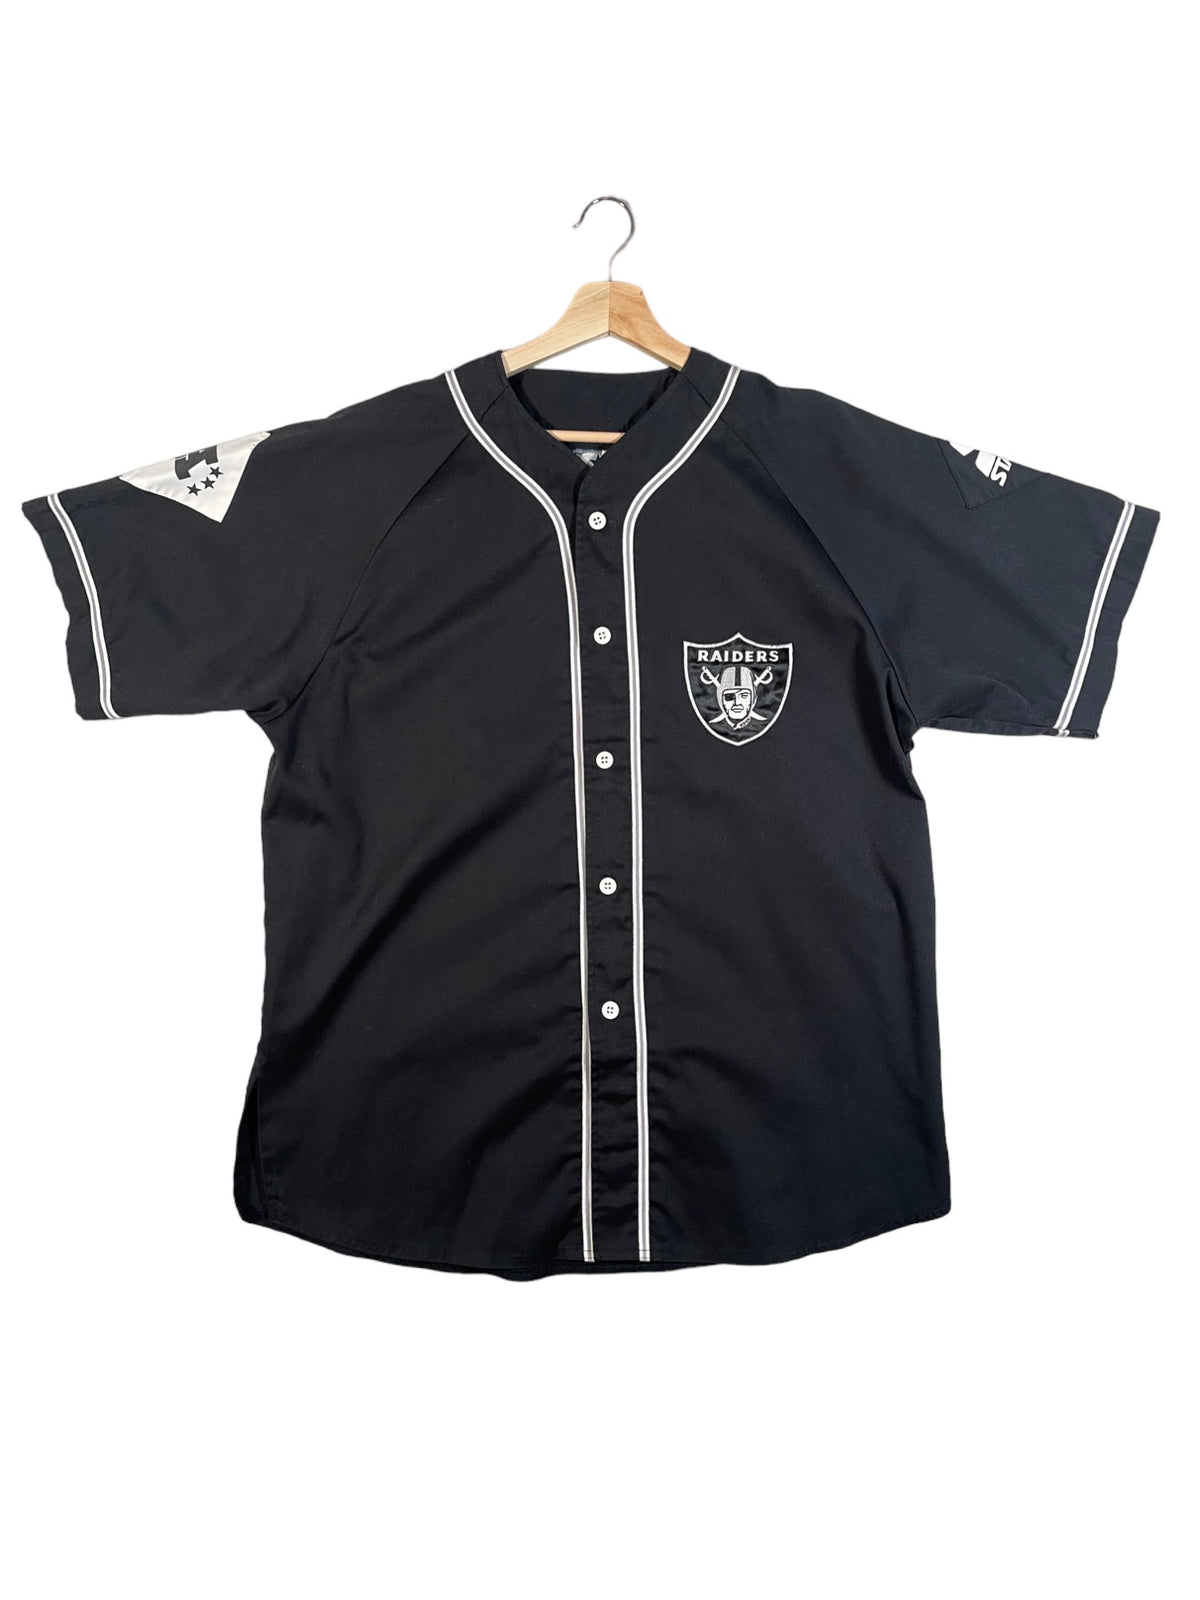 Vintage 1990's Los Angeles Raiders Starter Baseball Jersey